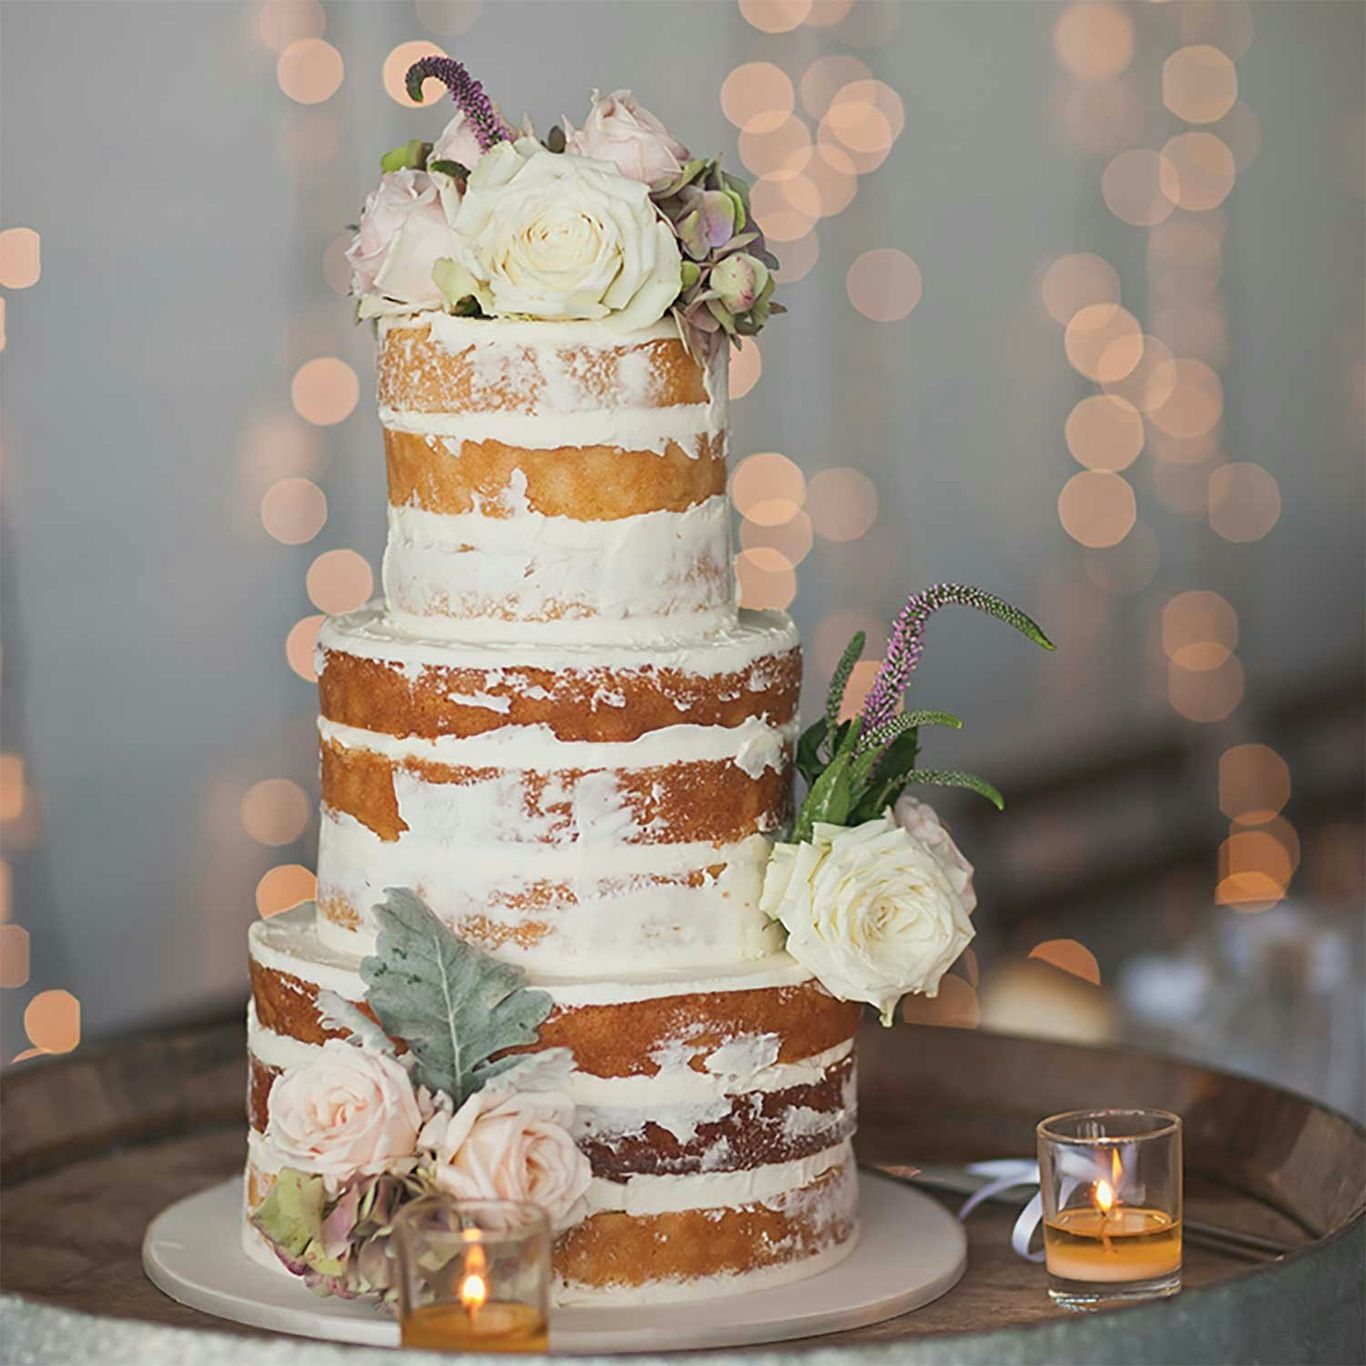 https://royaldesign.com/image/2/nordic-ware-naturals-wedding-cake-set-5-rear-molds-2?w=800&quality=80